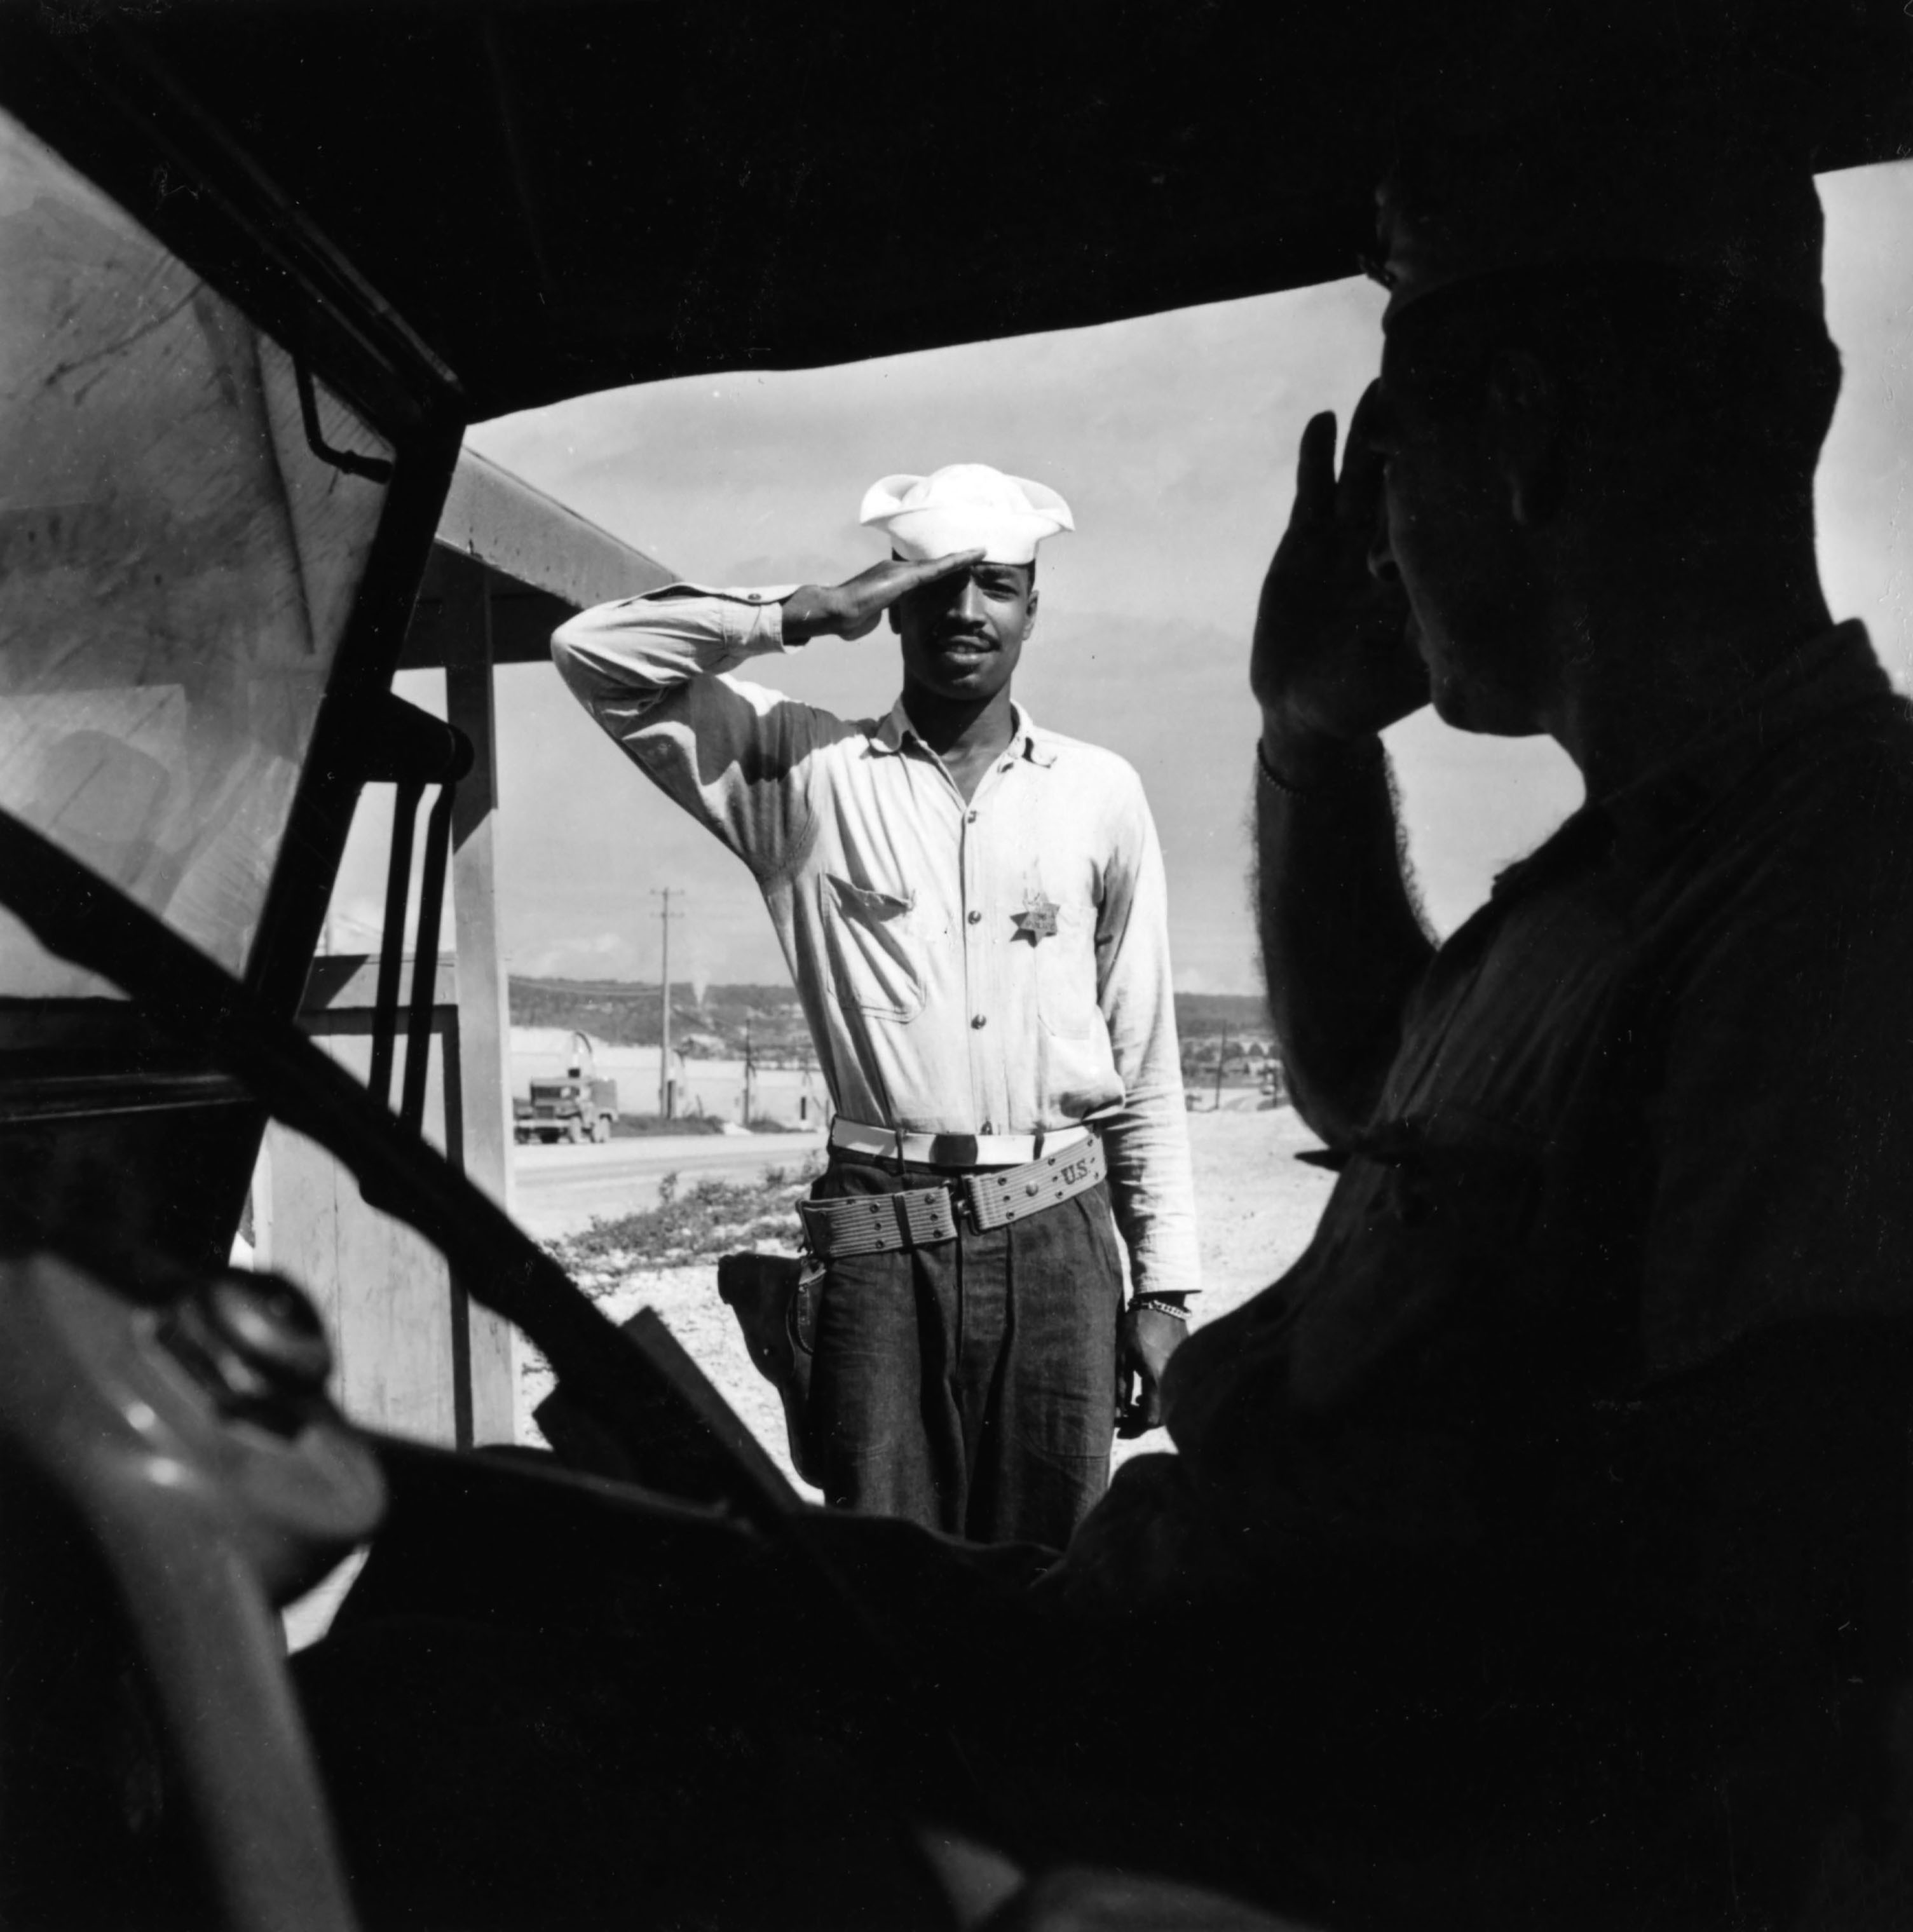 A sailor assigned to work as a laborer at the U.S. Naval Supply Depot on Guam saluting an officer. (Wayne Miller—Magnum Photos)